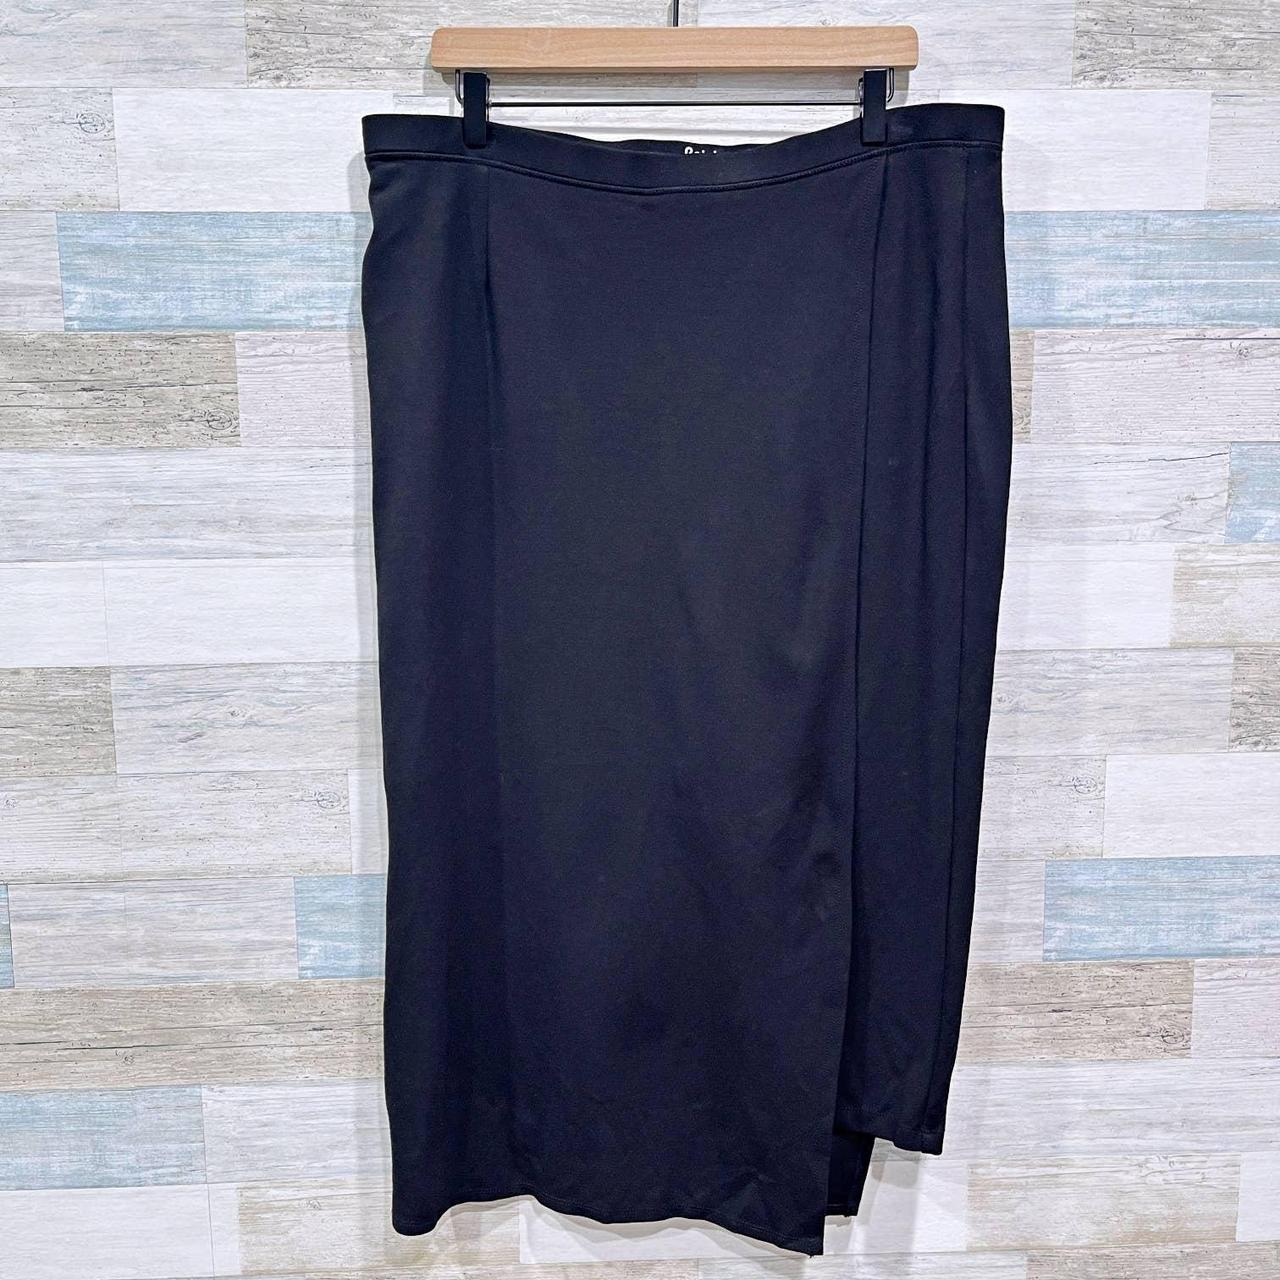 Lrady Women's Ruffle Pants High Waist Trousers Casual Beach Maxi Long  Palazzo Overlay Pant Skirts | Skirt pants, Pants for women, Womens skirt